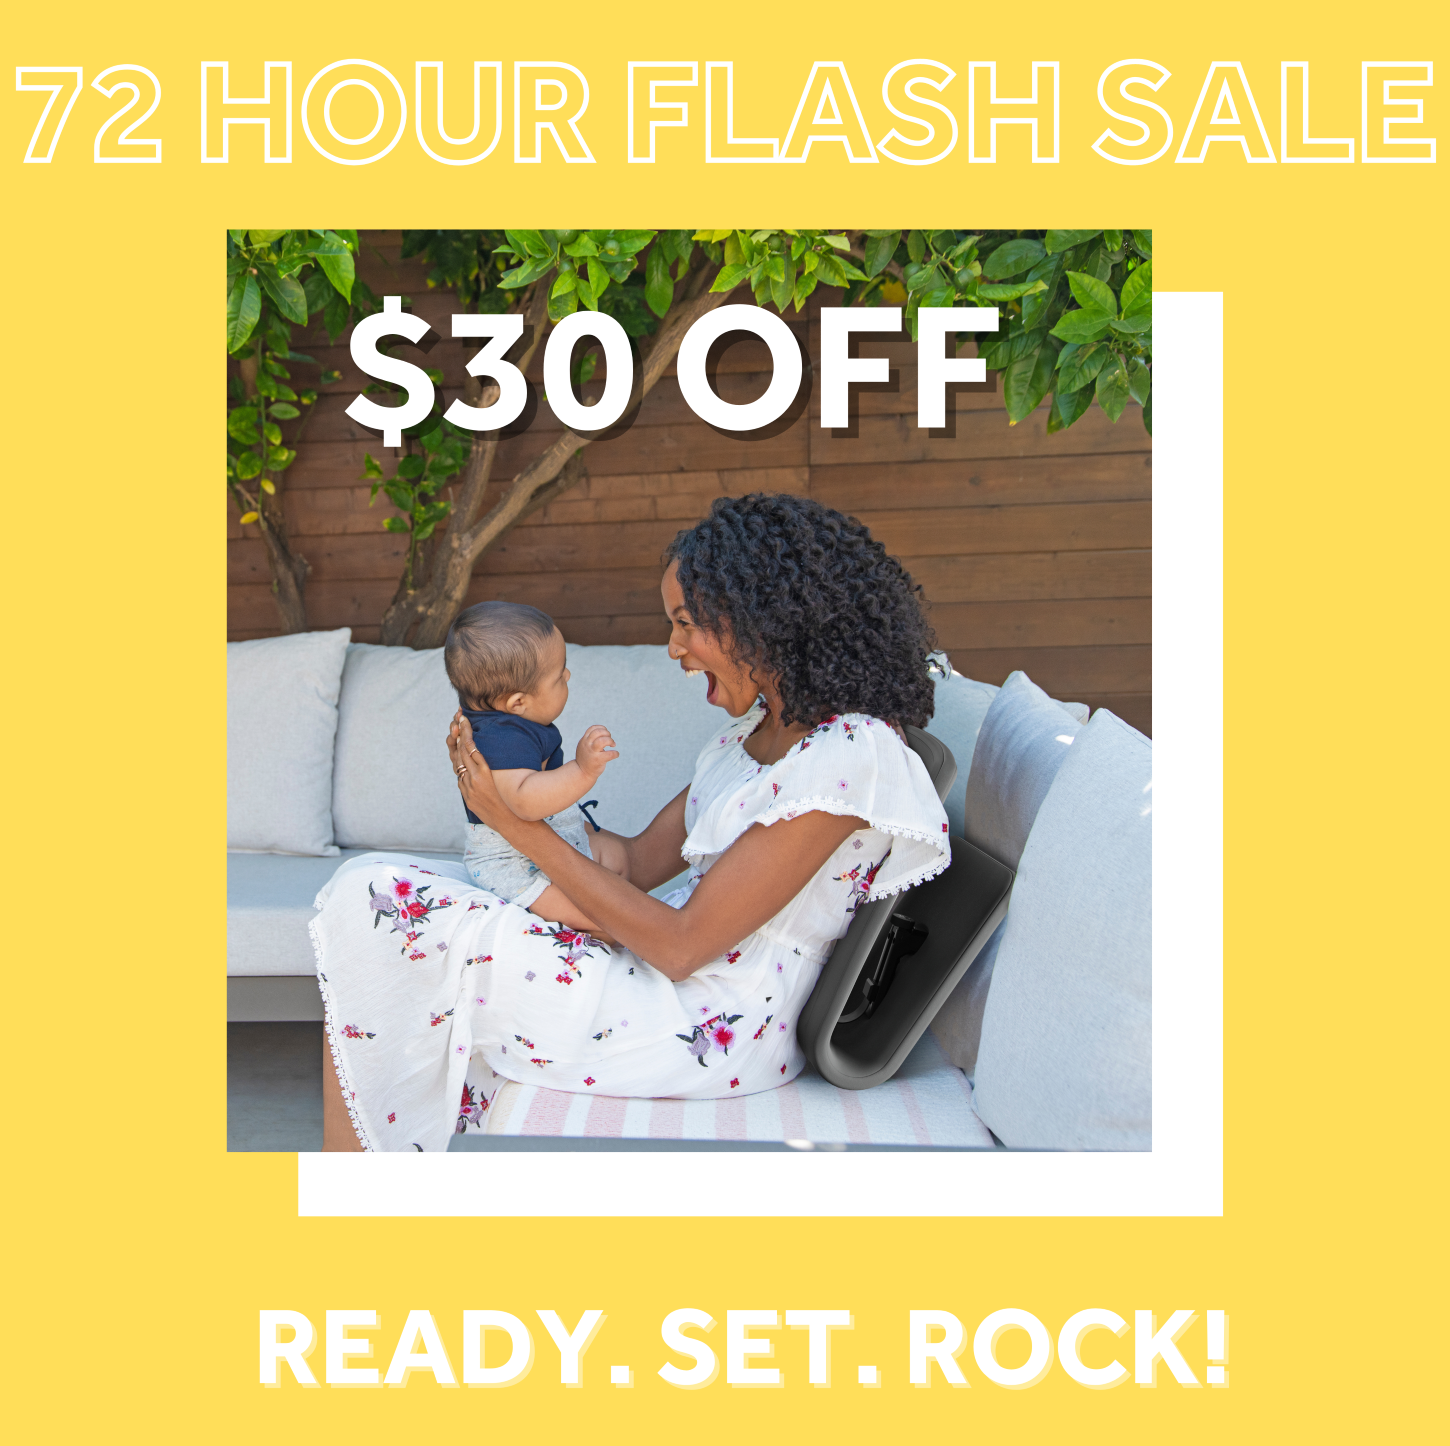 72 Hour Flash Sale, $30 OFF, Ready. Set. Rock!, Woman Using Ready Rocker w/ Baby